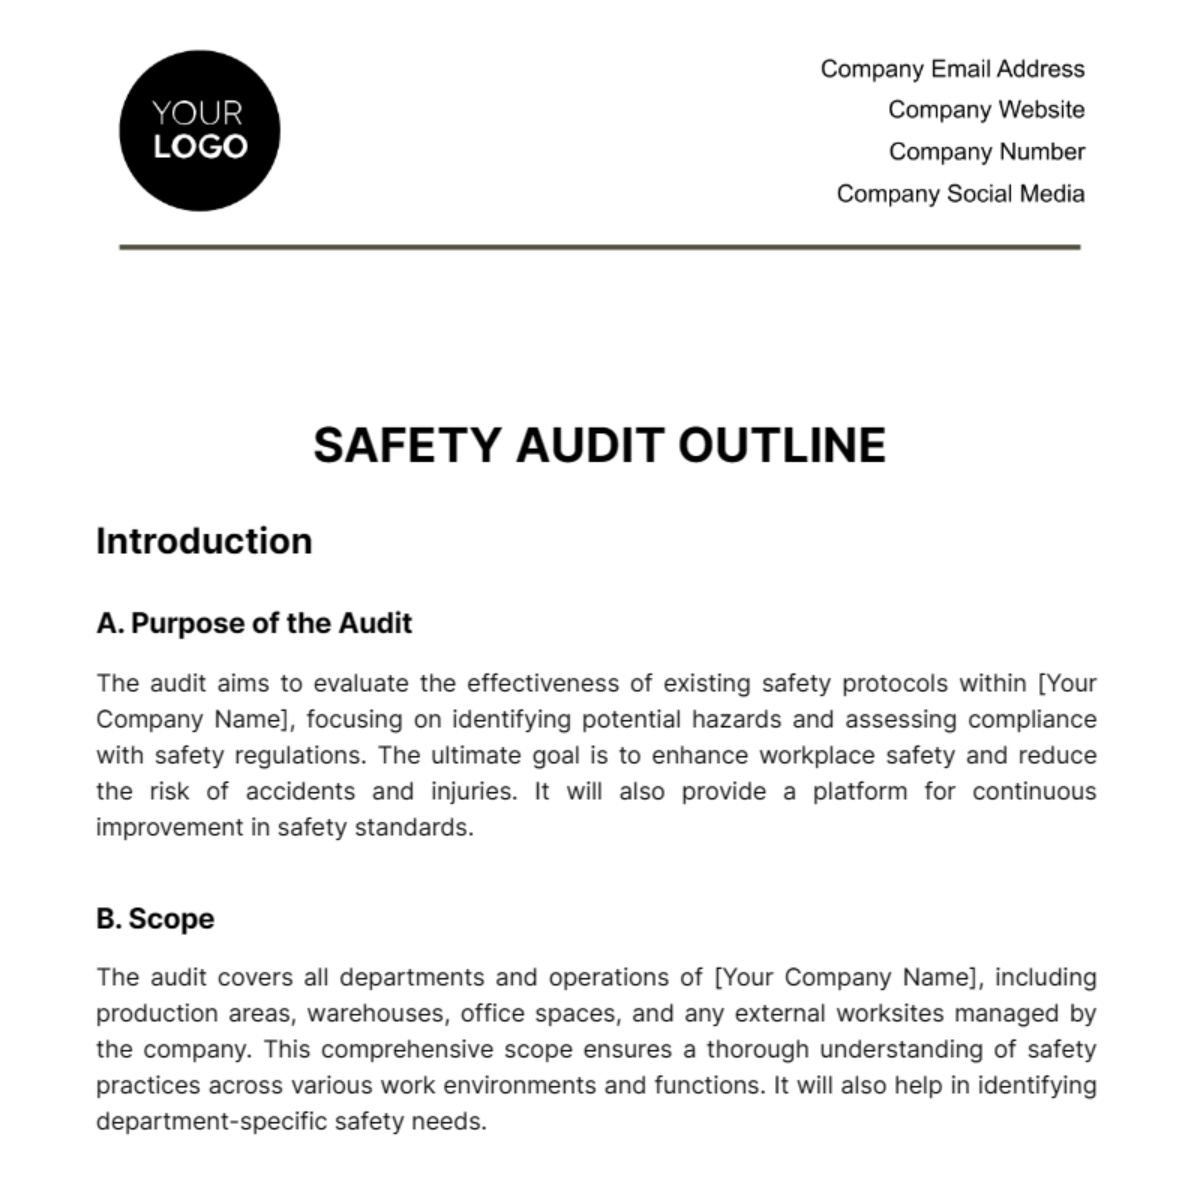 Safety Audit Outline Template